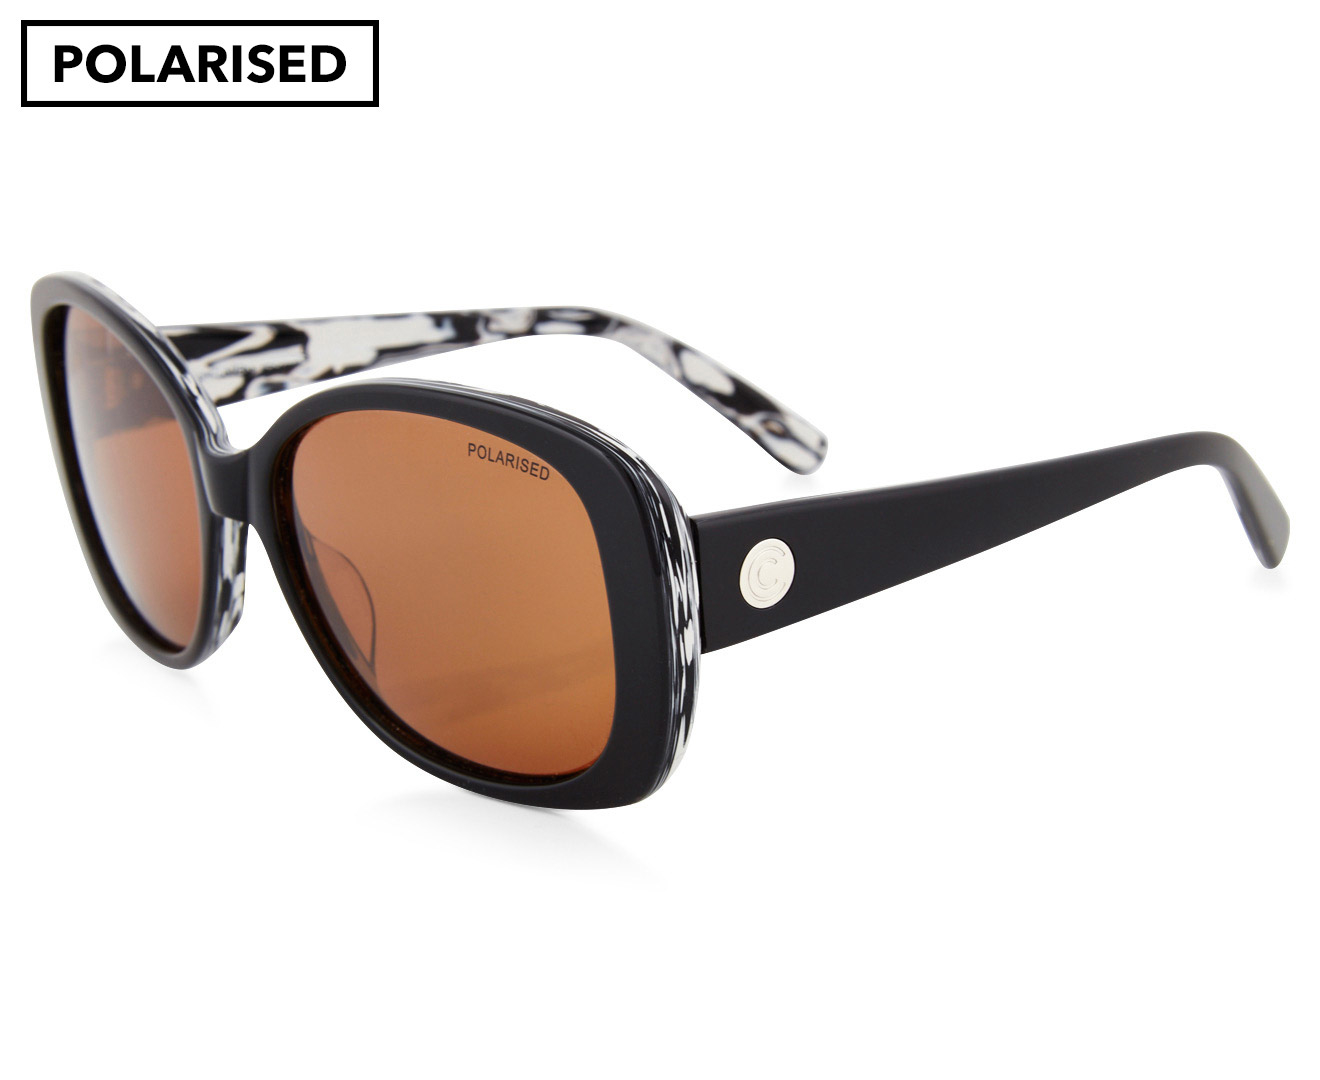 Cancer Council Women's Shoalhaven Polarised Sunglasses - Black/White Marble